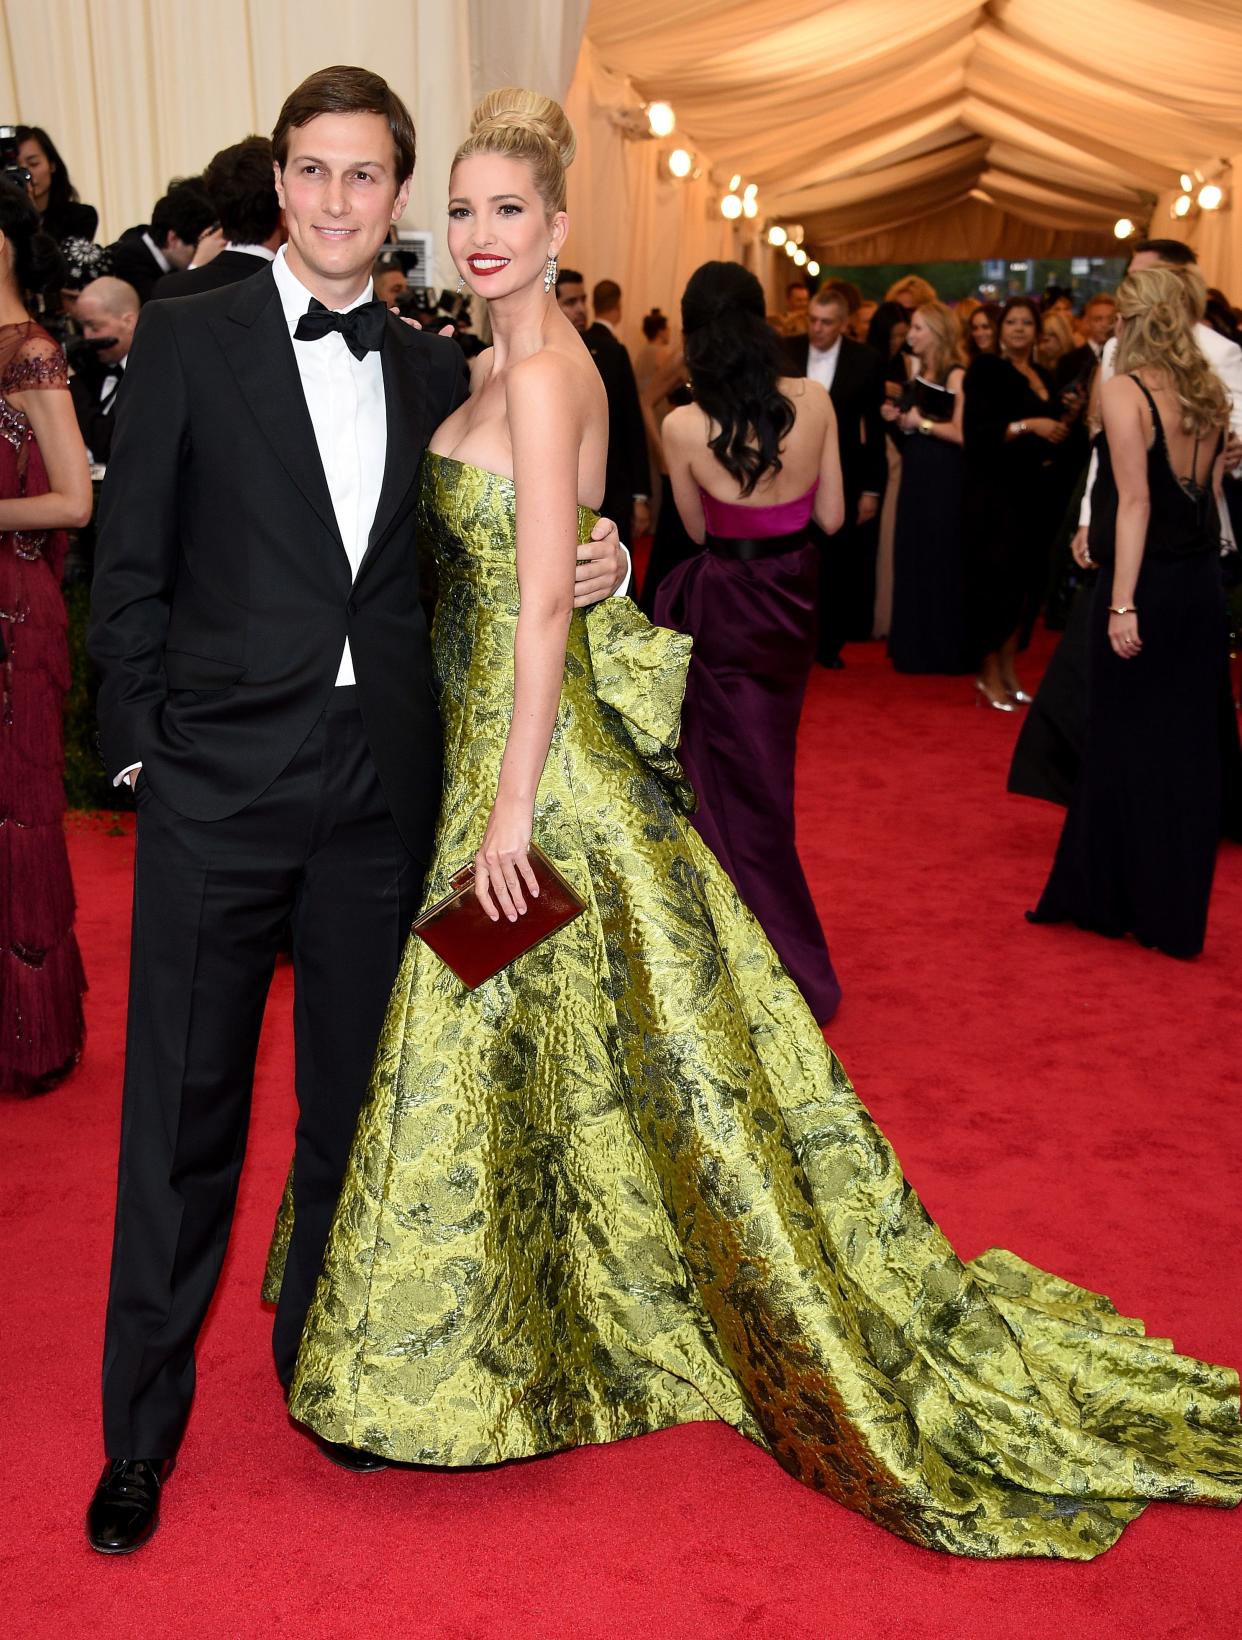 Ivanka Trump and Jared Kushner at the Met Gala in 2014